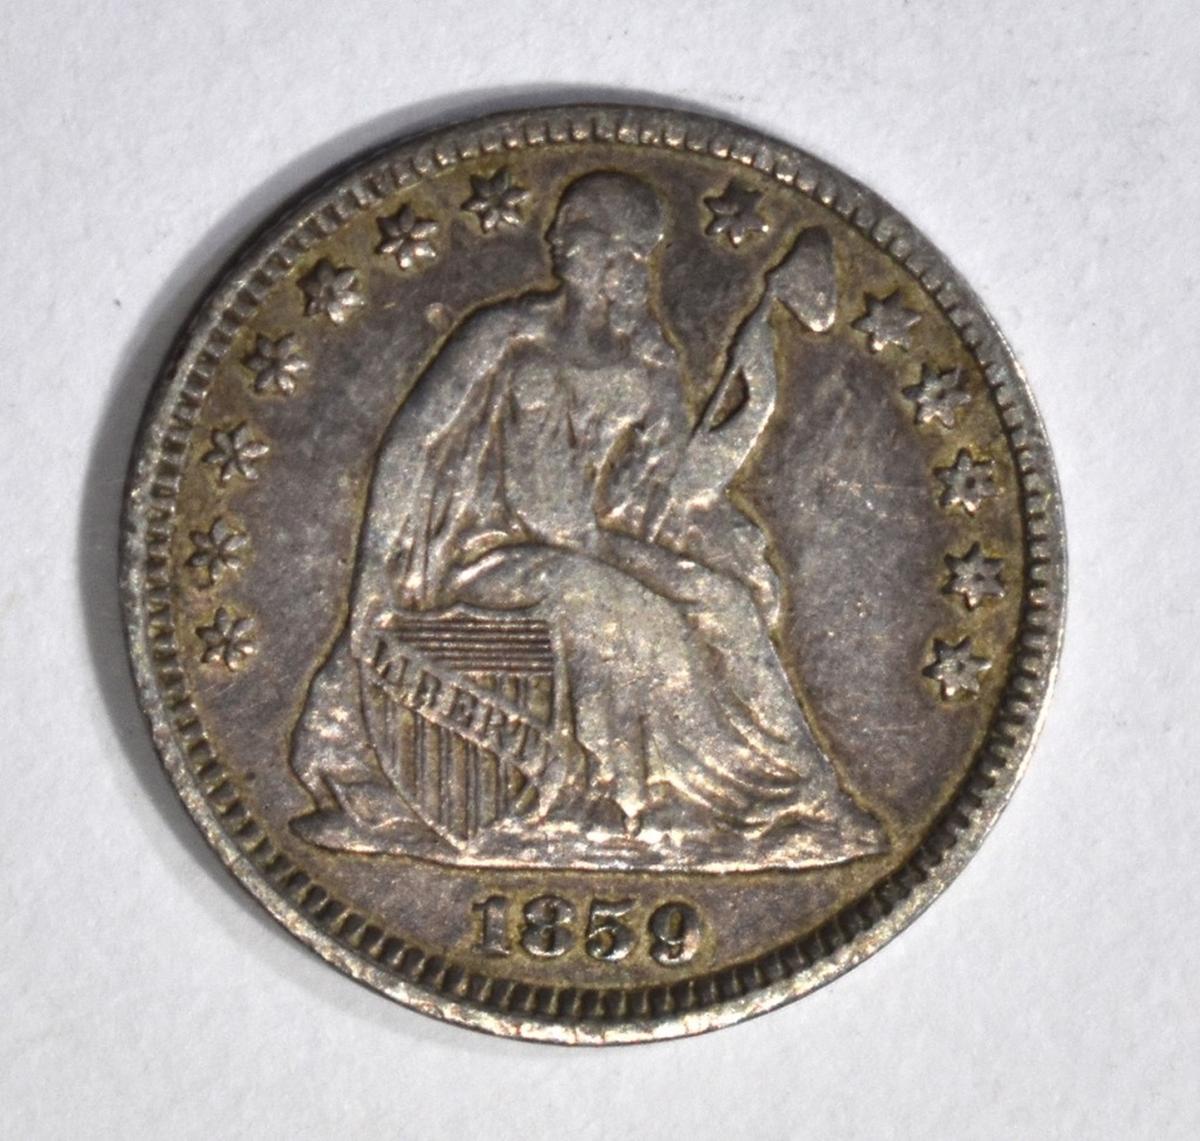 1859 SEATED HALF DIME, XF/AU